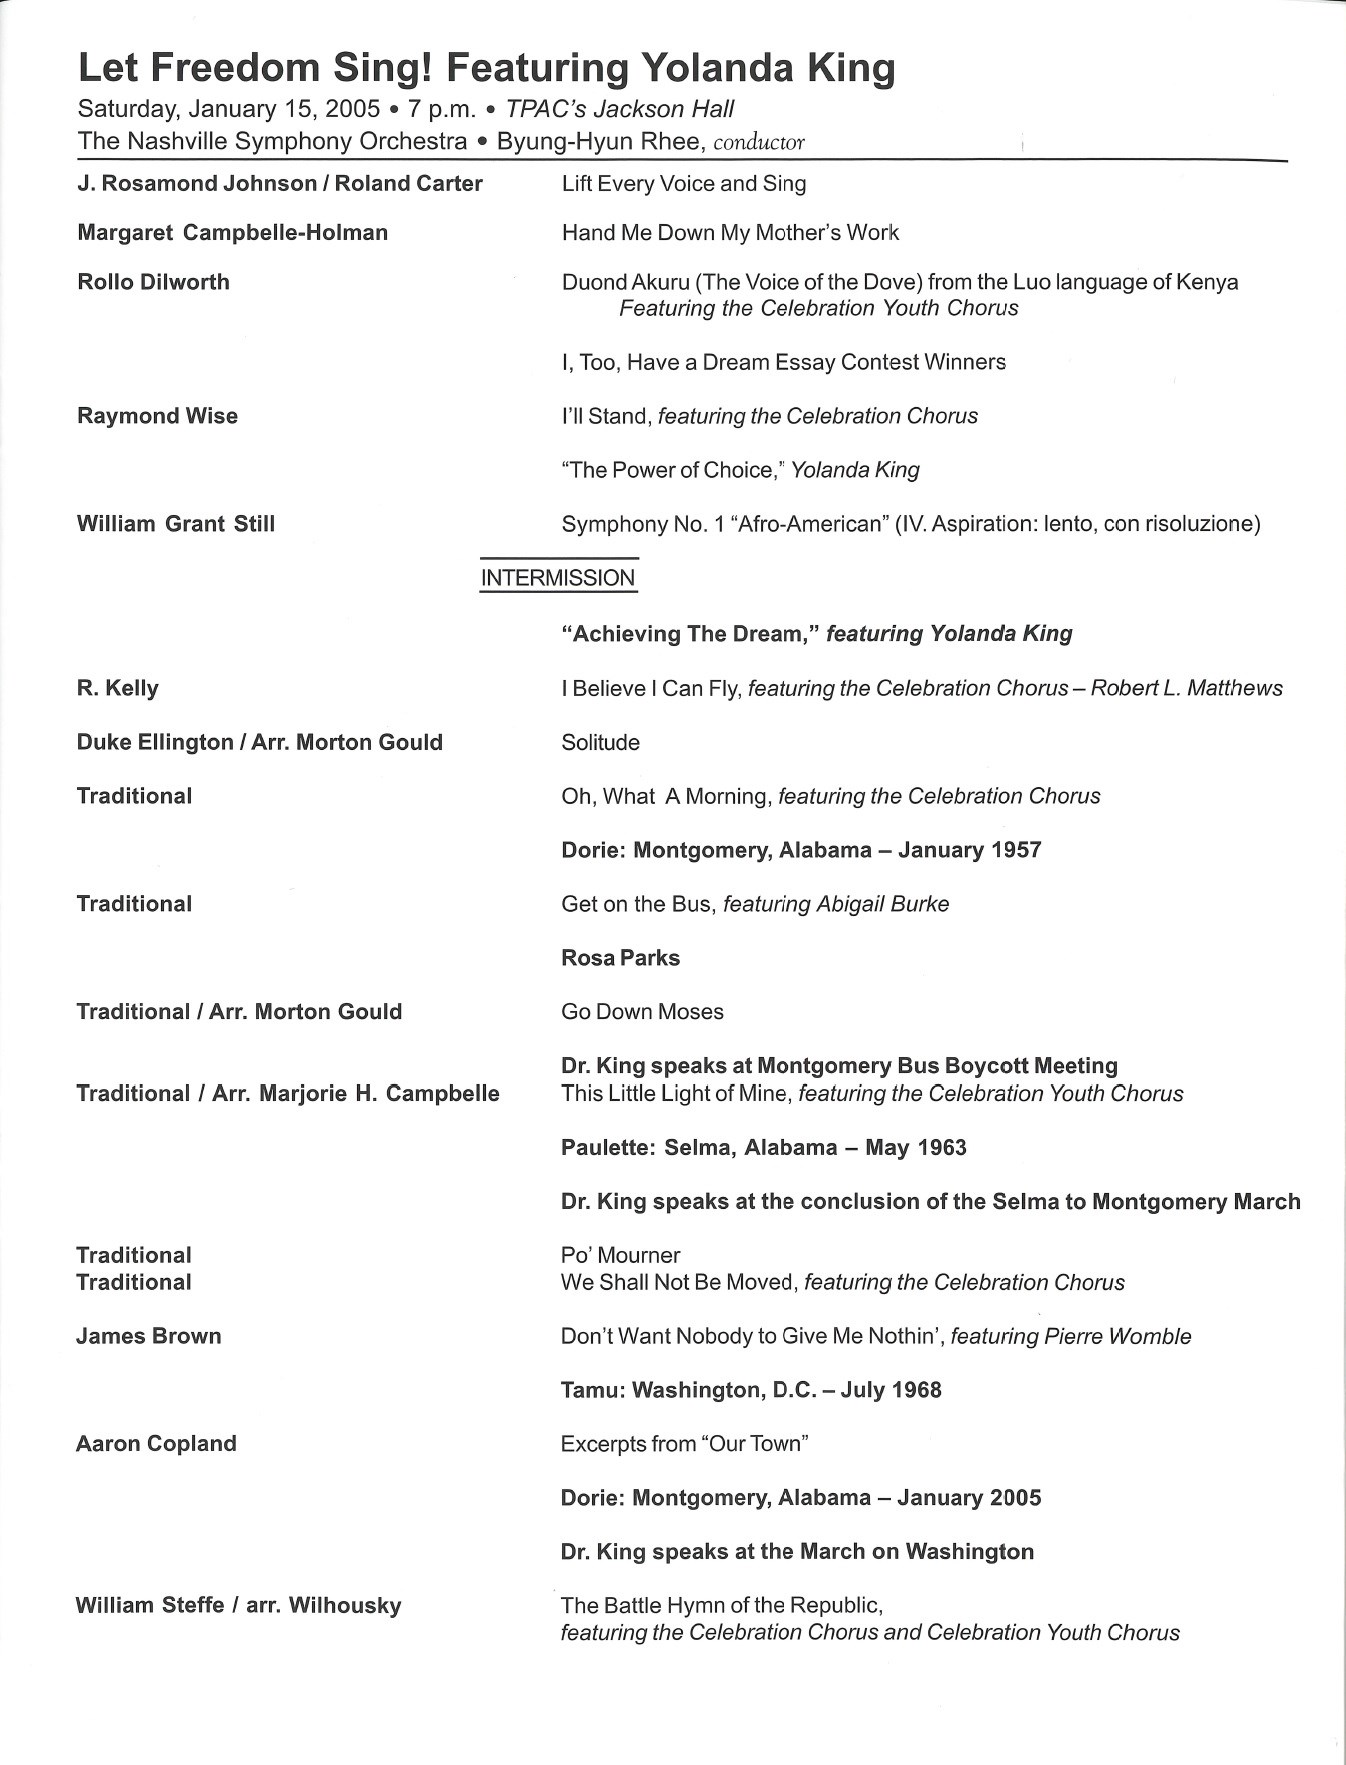 2005 LFS Program listing